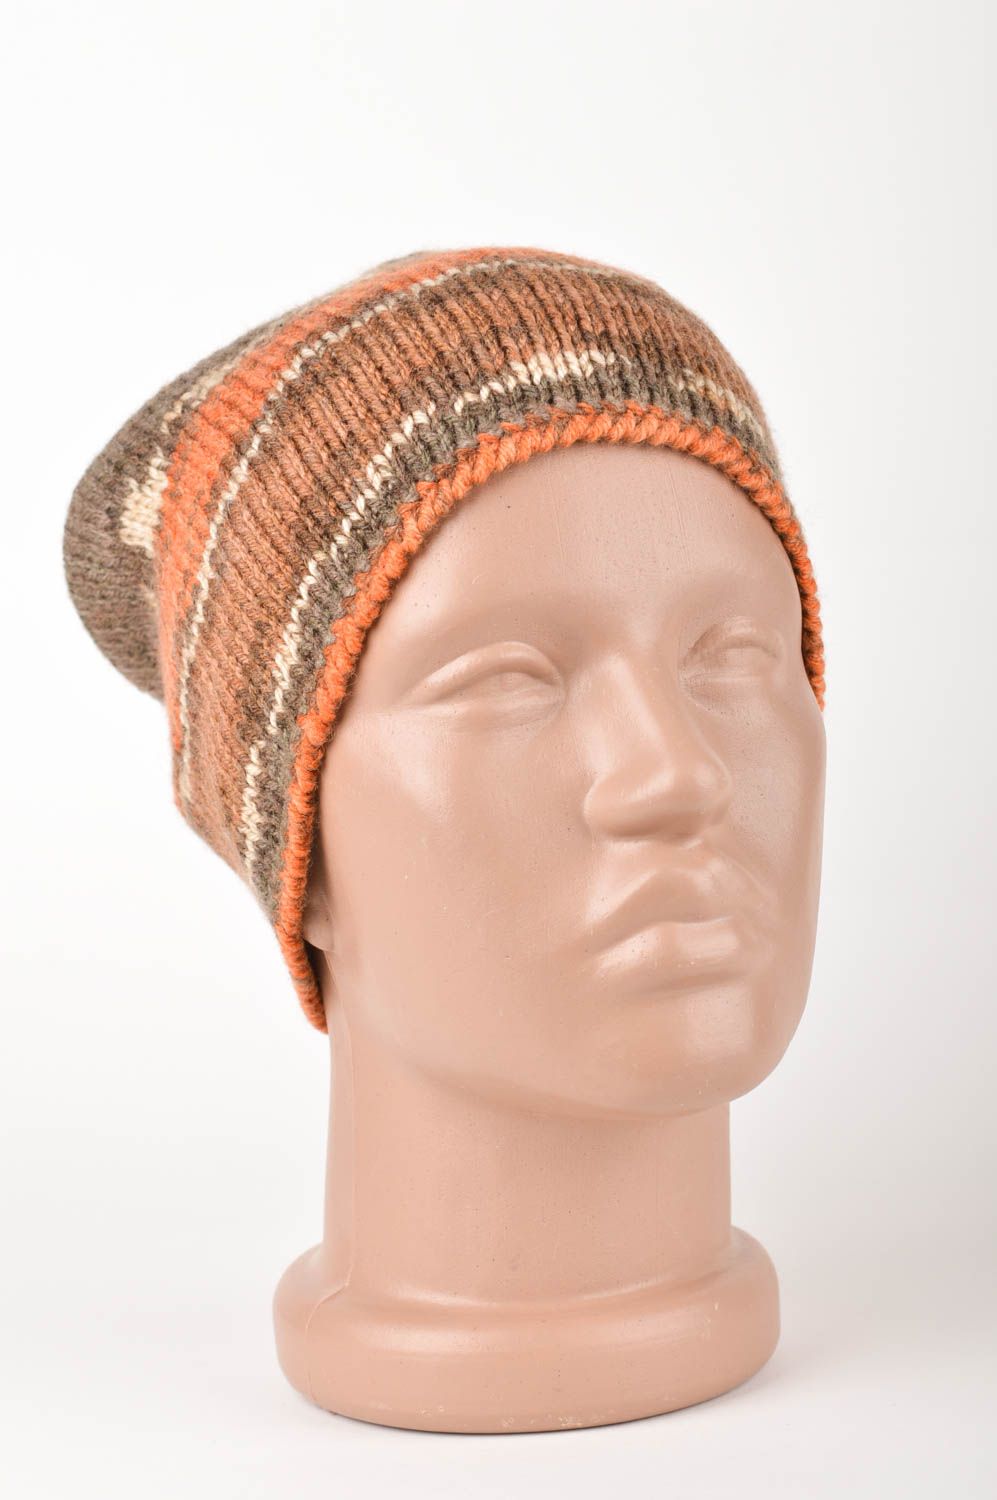 Crochet hat handmade winter hat crochet accessories best hats gifts ideas photo 1